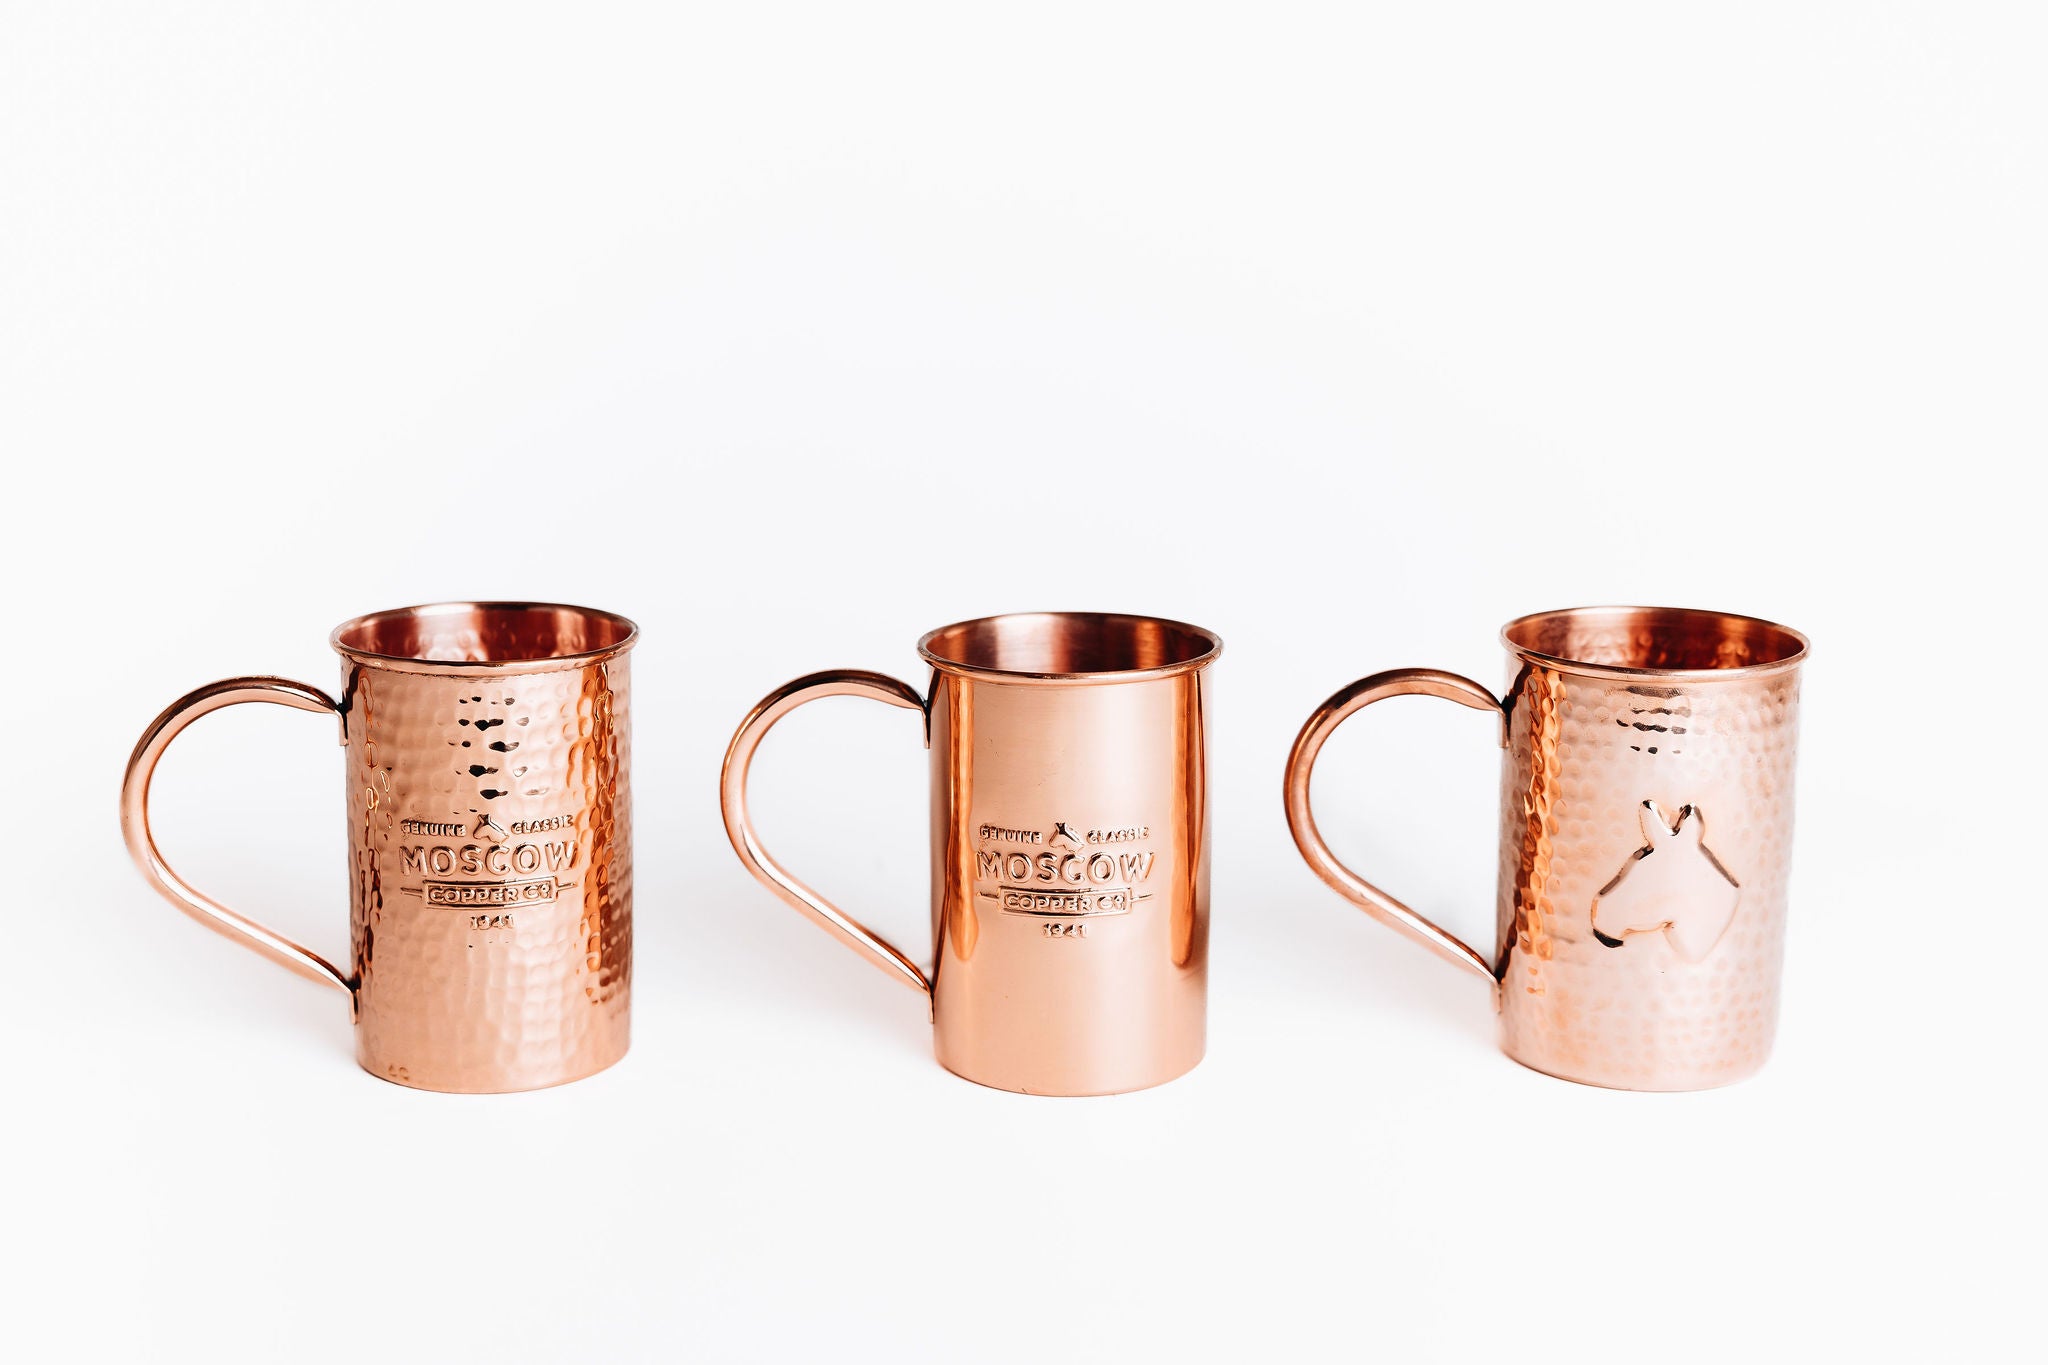 Cowboy Copper Mug Set